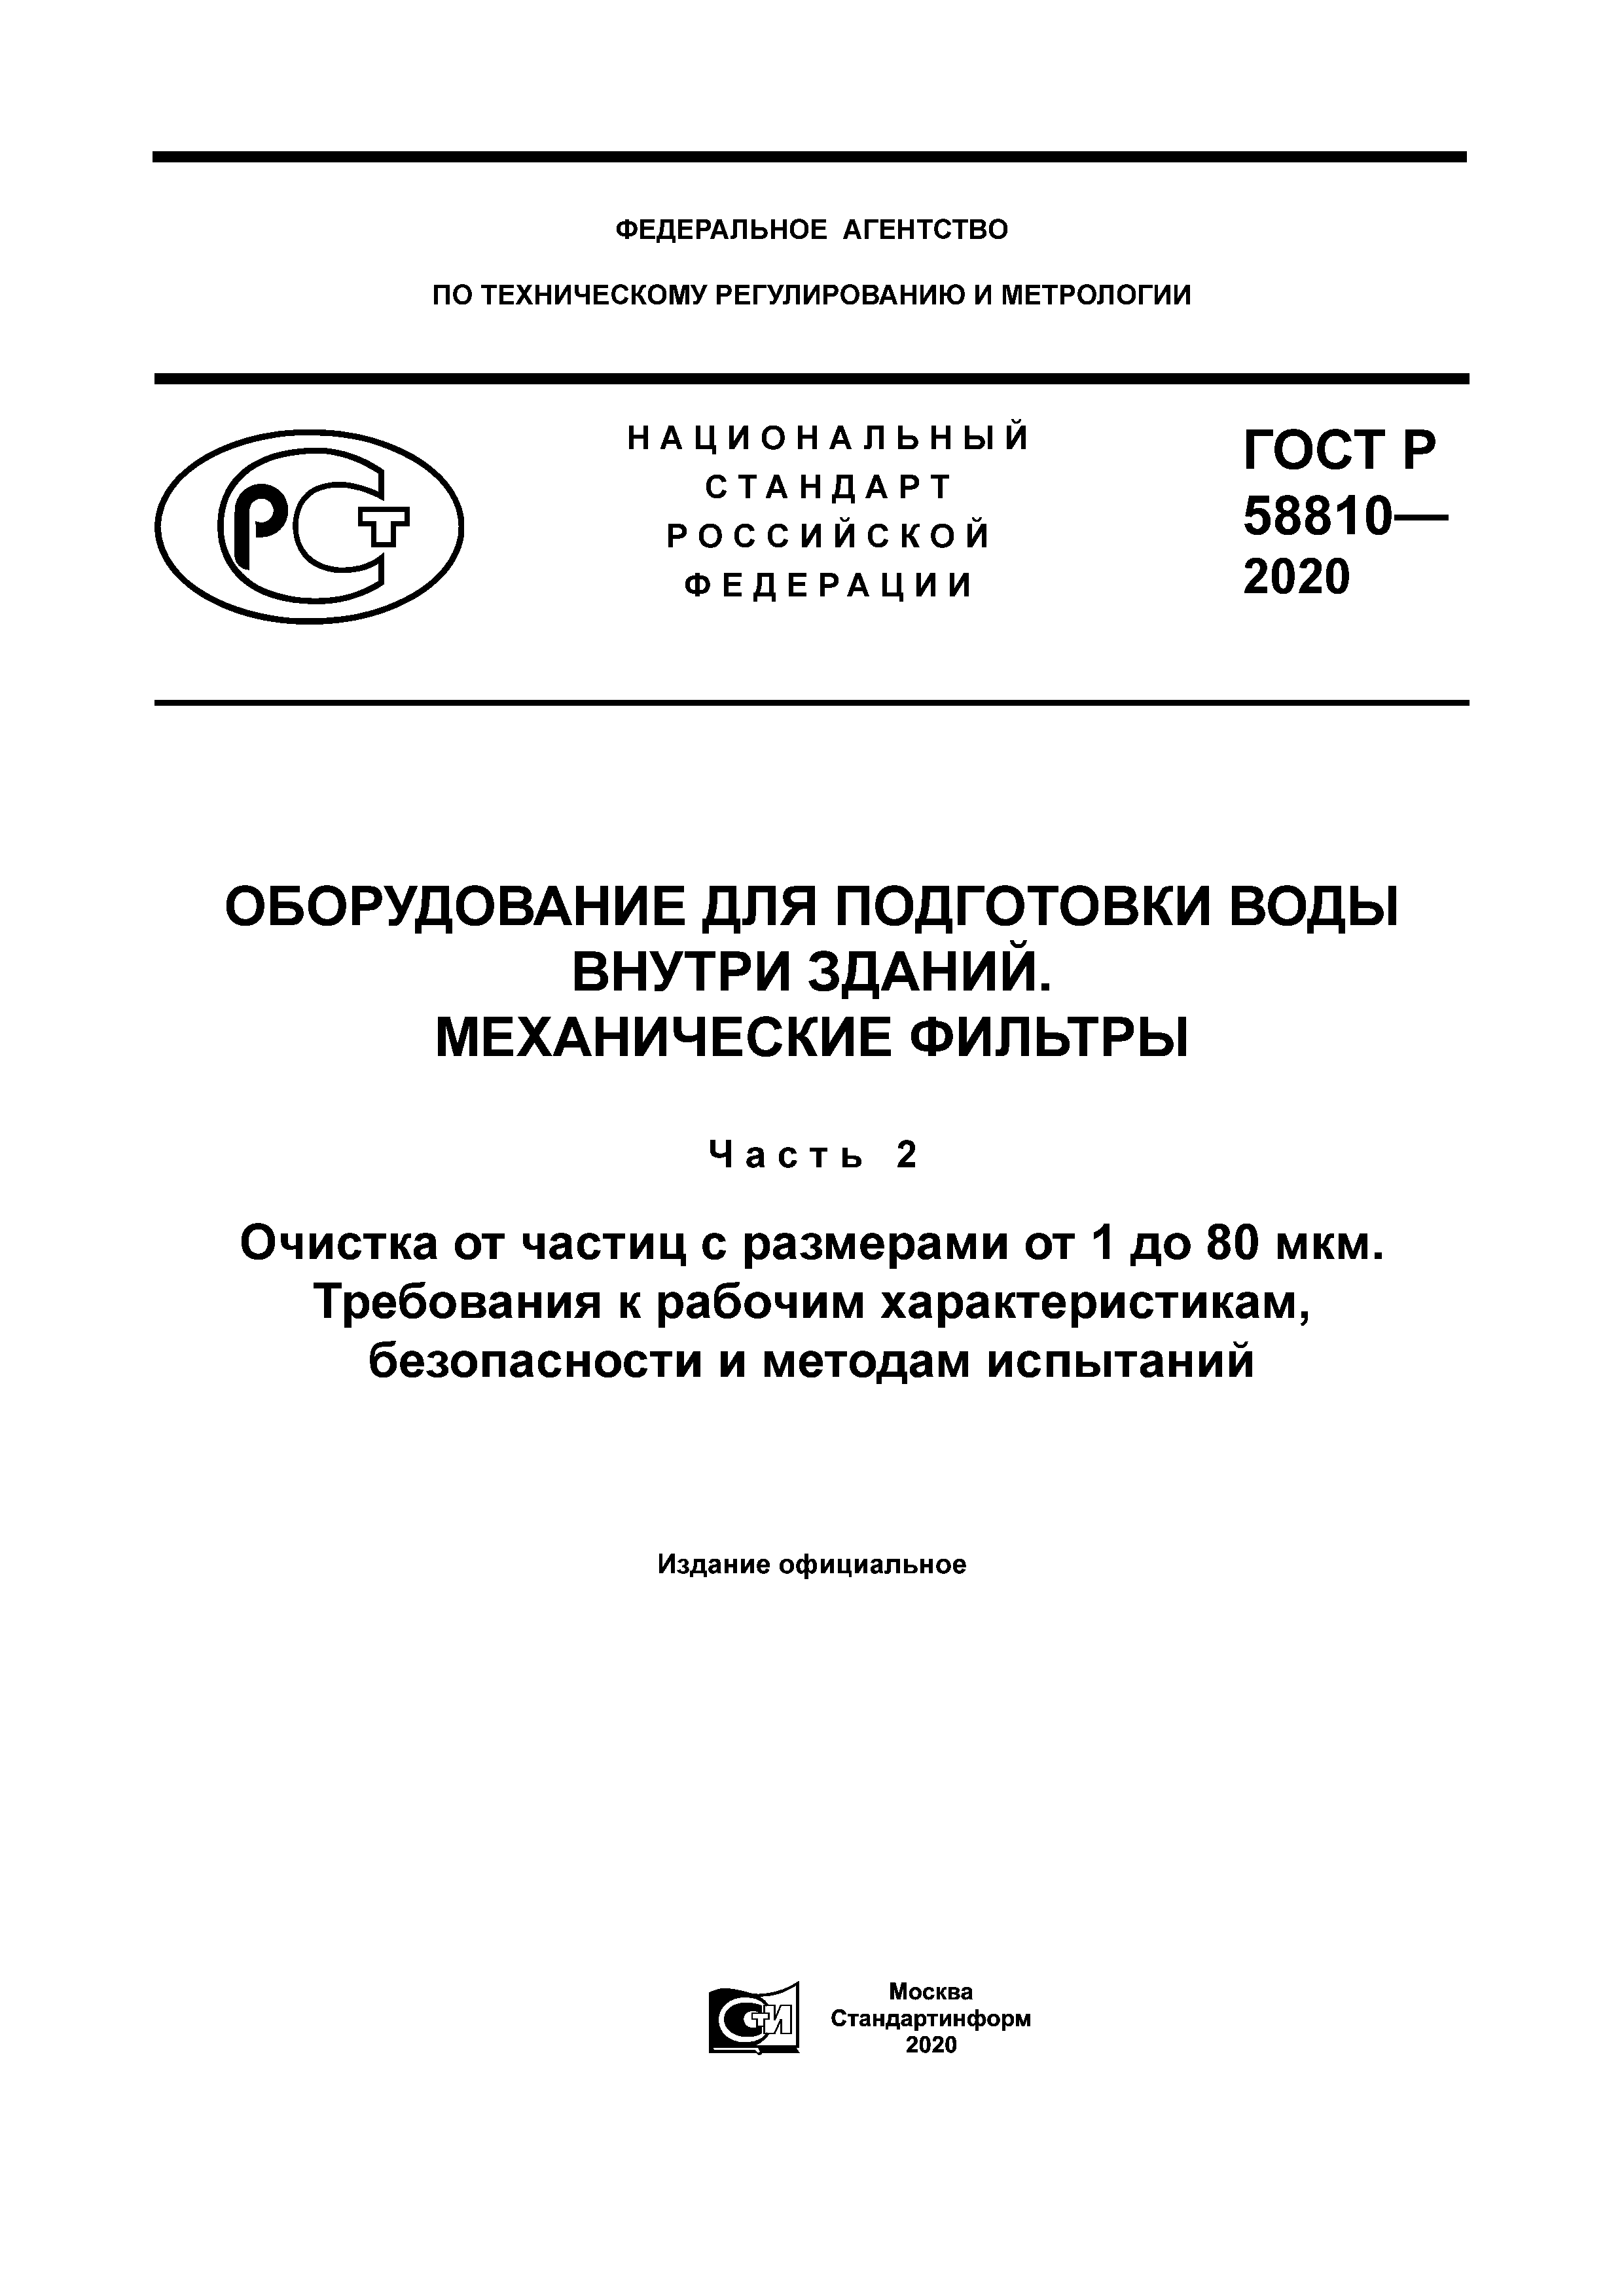 ГОСТ Р 58810-2020